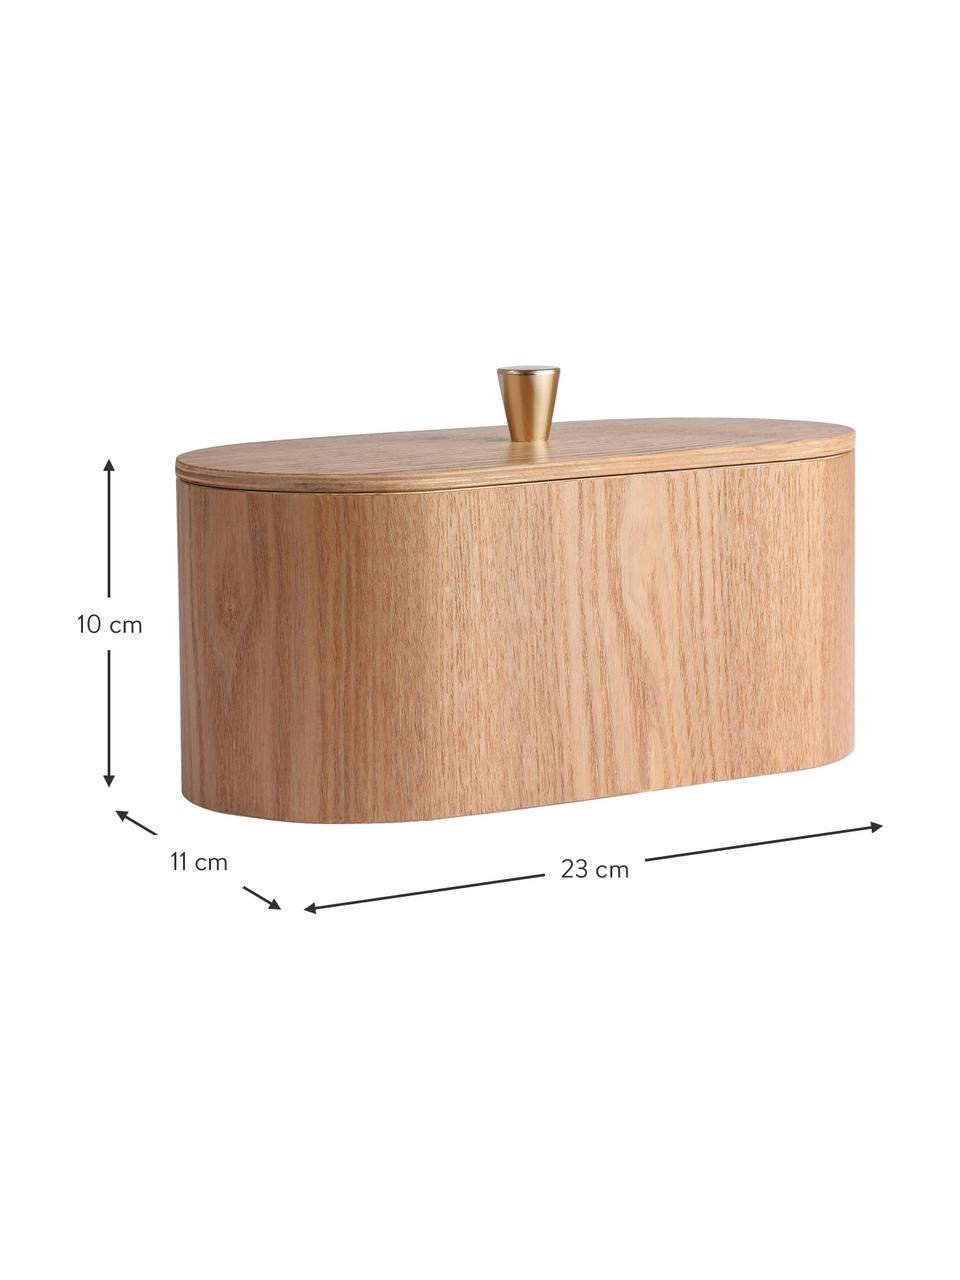 Holz-Aufbewahrungsbox Willow, Box: Weidenholz, Griff: Messing, Weidenholz, Messing, B 23 x H 10 cm